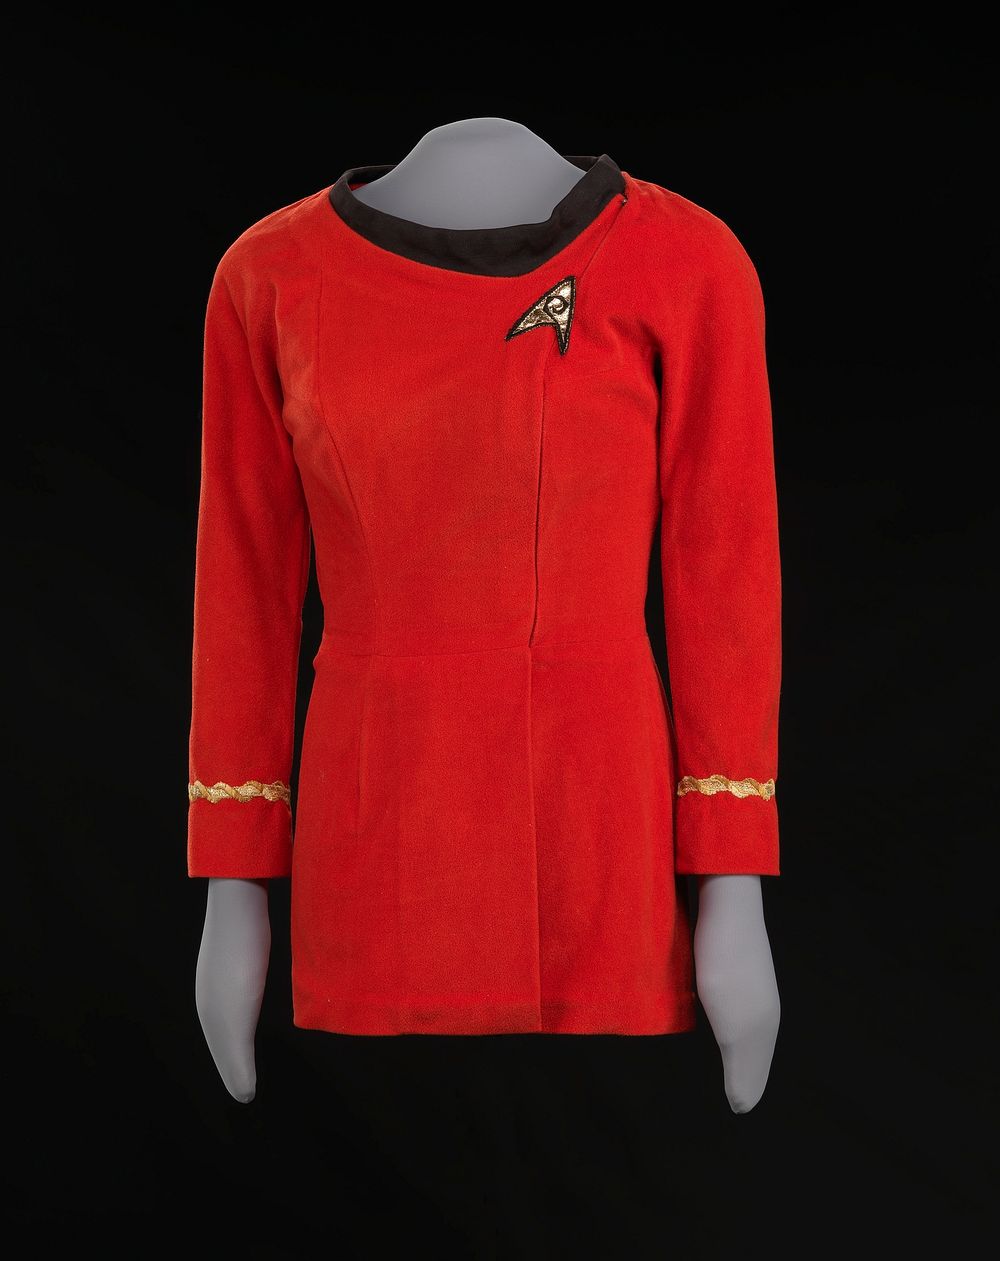 Red Starfleet uniform worn by Nichelle Nichols as Lt. Uhura on Star Trek, National Museum of African American History and…